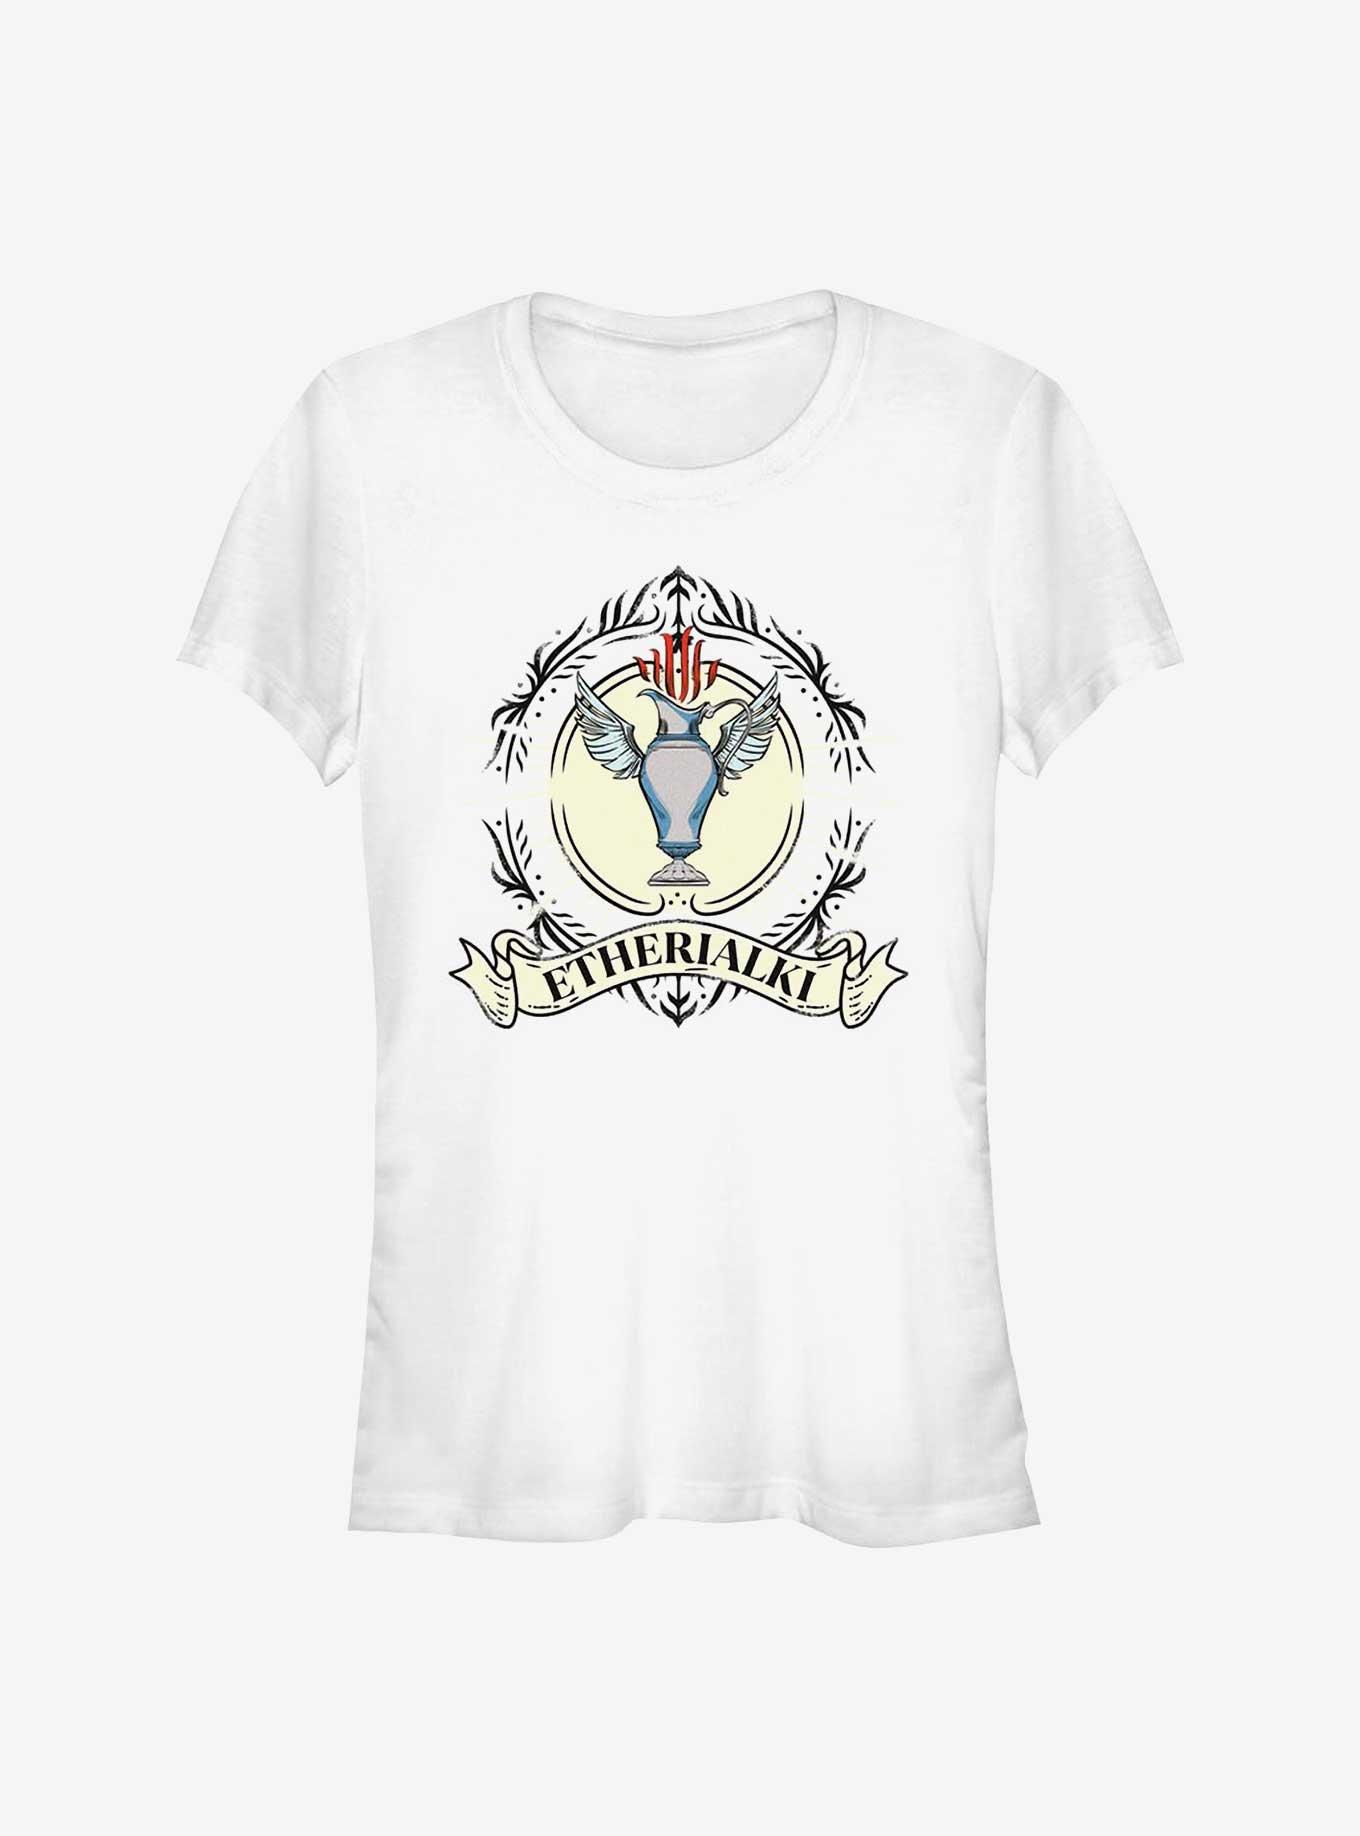 Shadow and Bone Etherialki Vase Girls T-Shirt, WHITE, hi-res